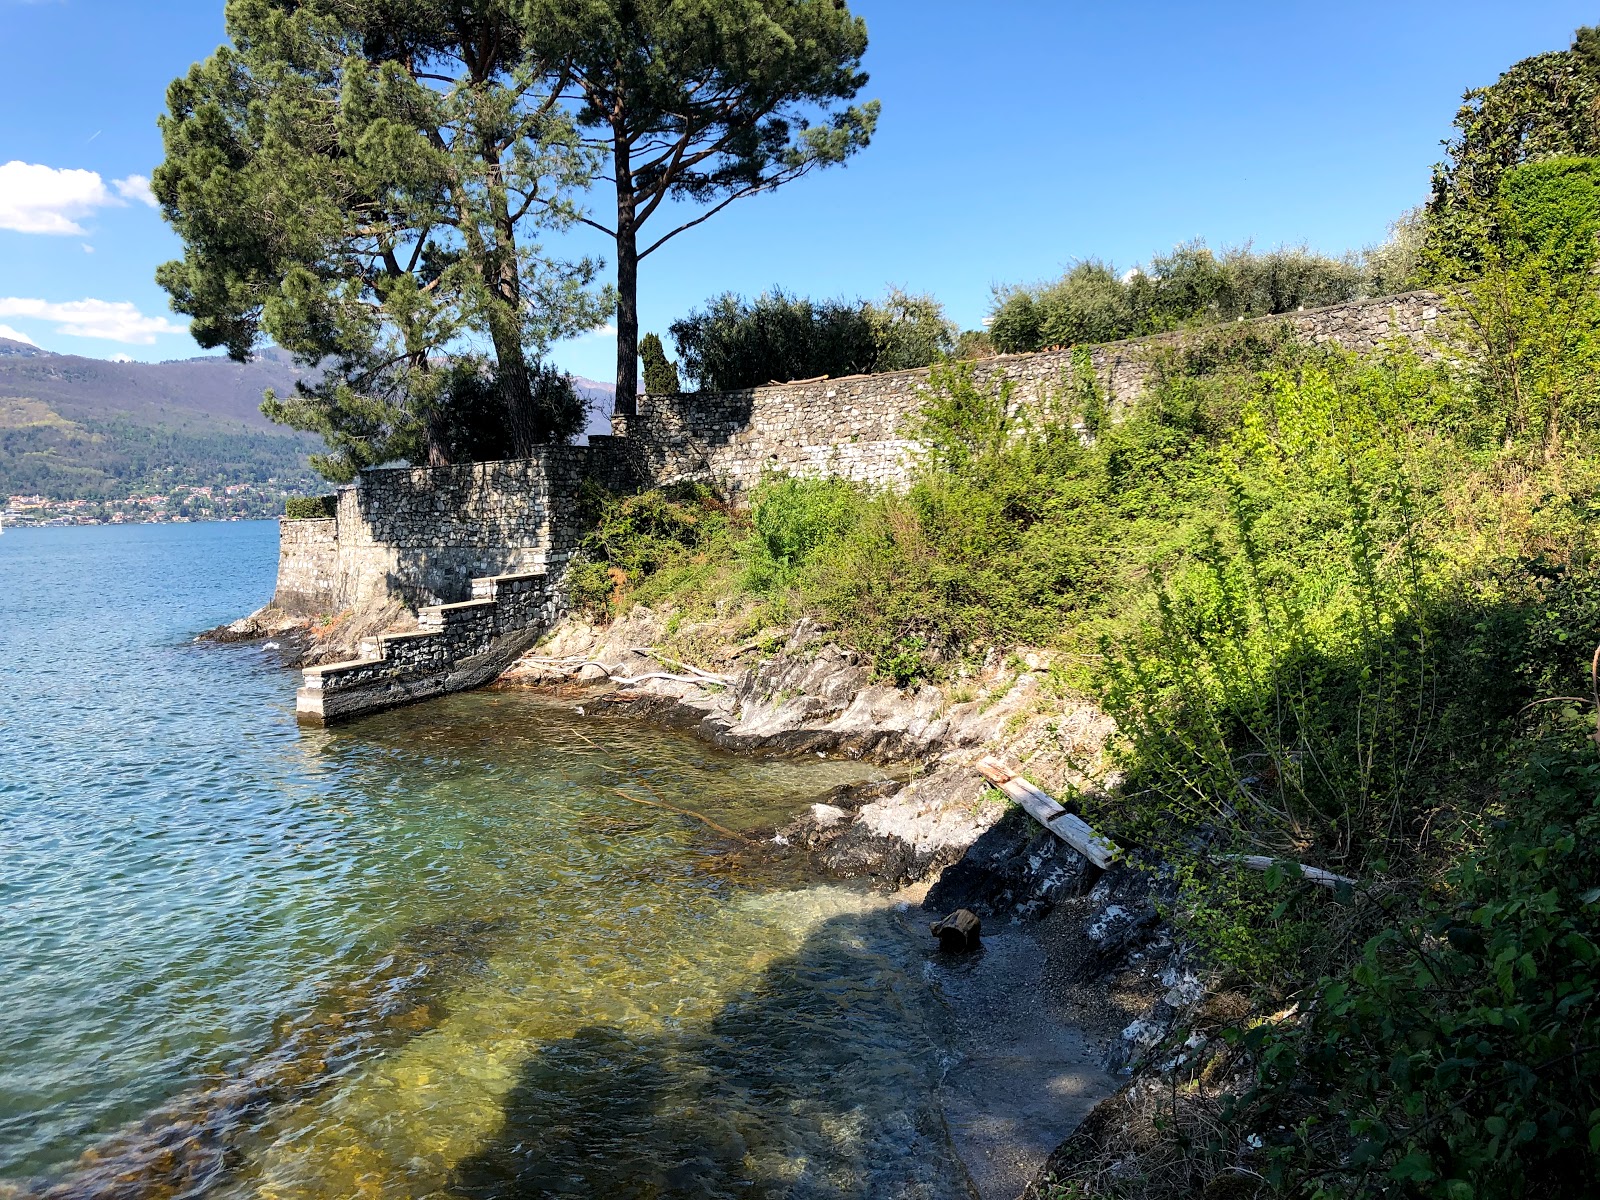 Spiaggia delle Olive的照片 带有碧绿色纯水表面